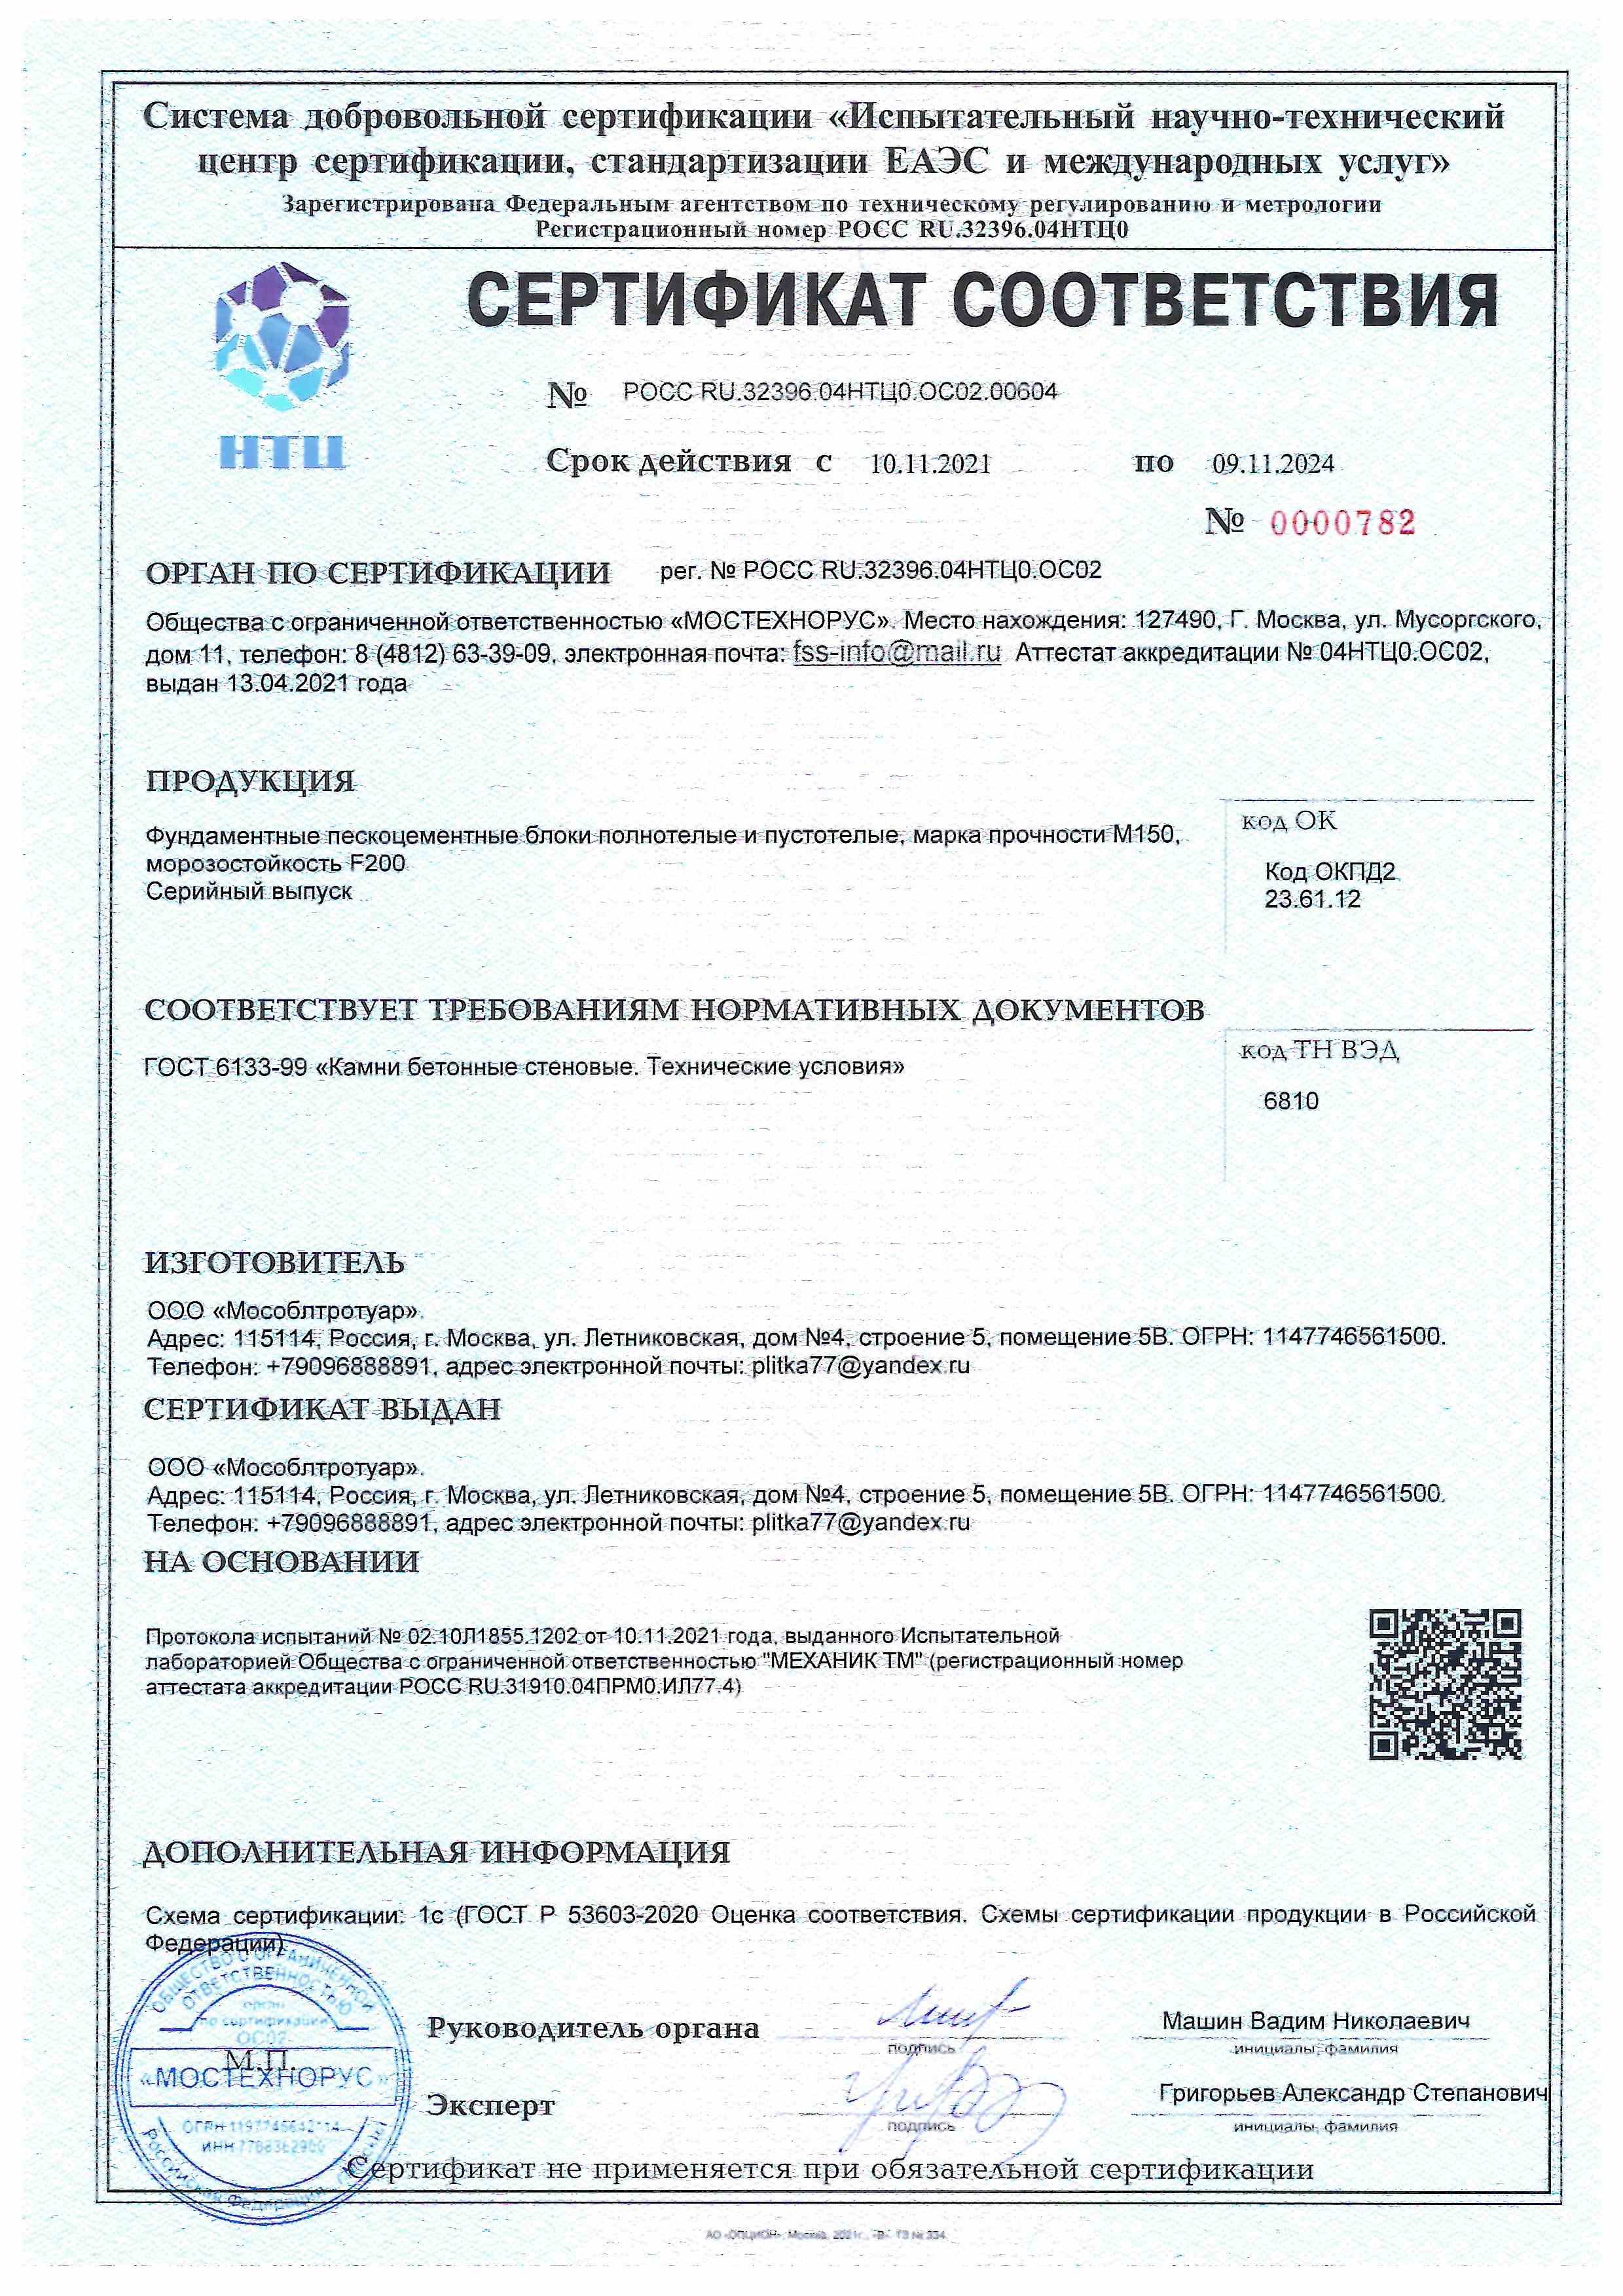 Сертификат соответствия фундаментные блоки "МосОблТротуар"